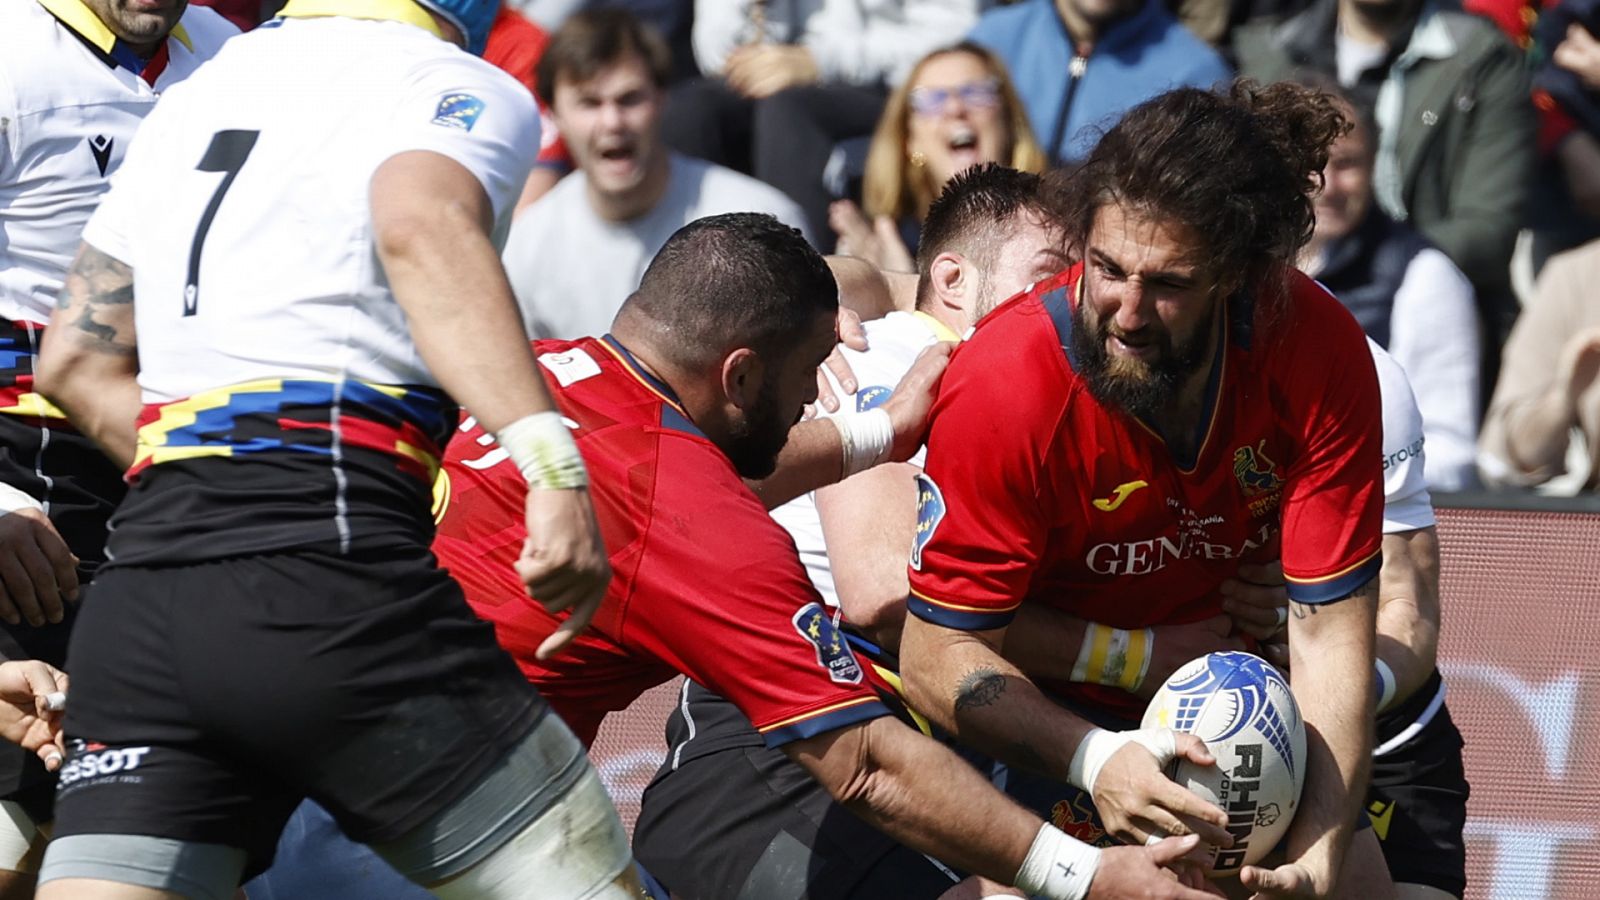 Rugby - Campeonato de Europa masculino: España - Rumanía - ver ahora